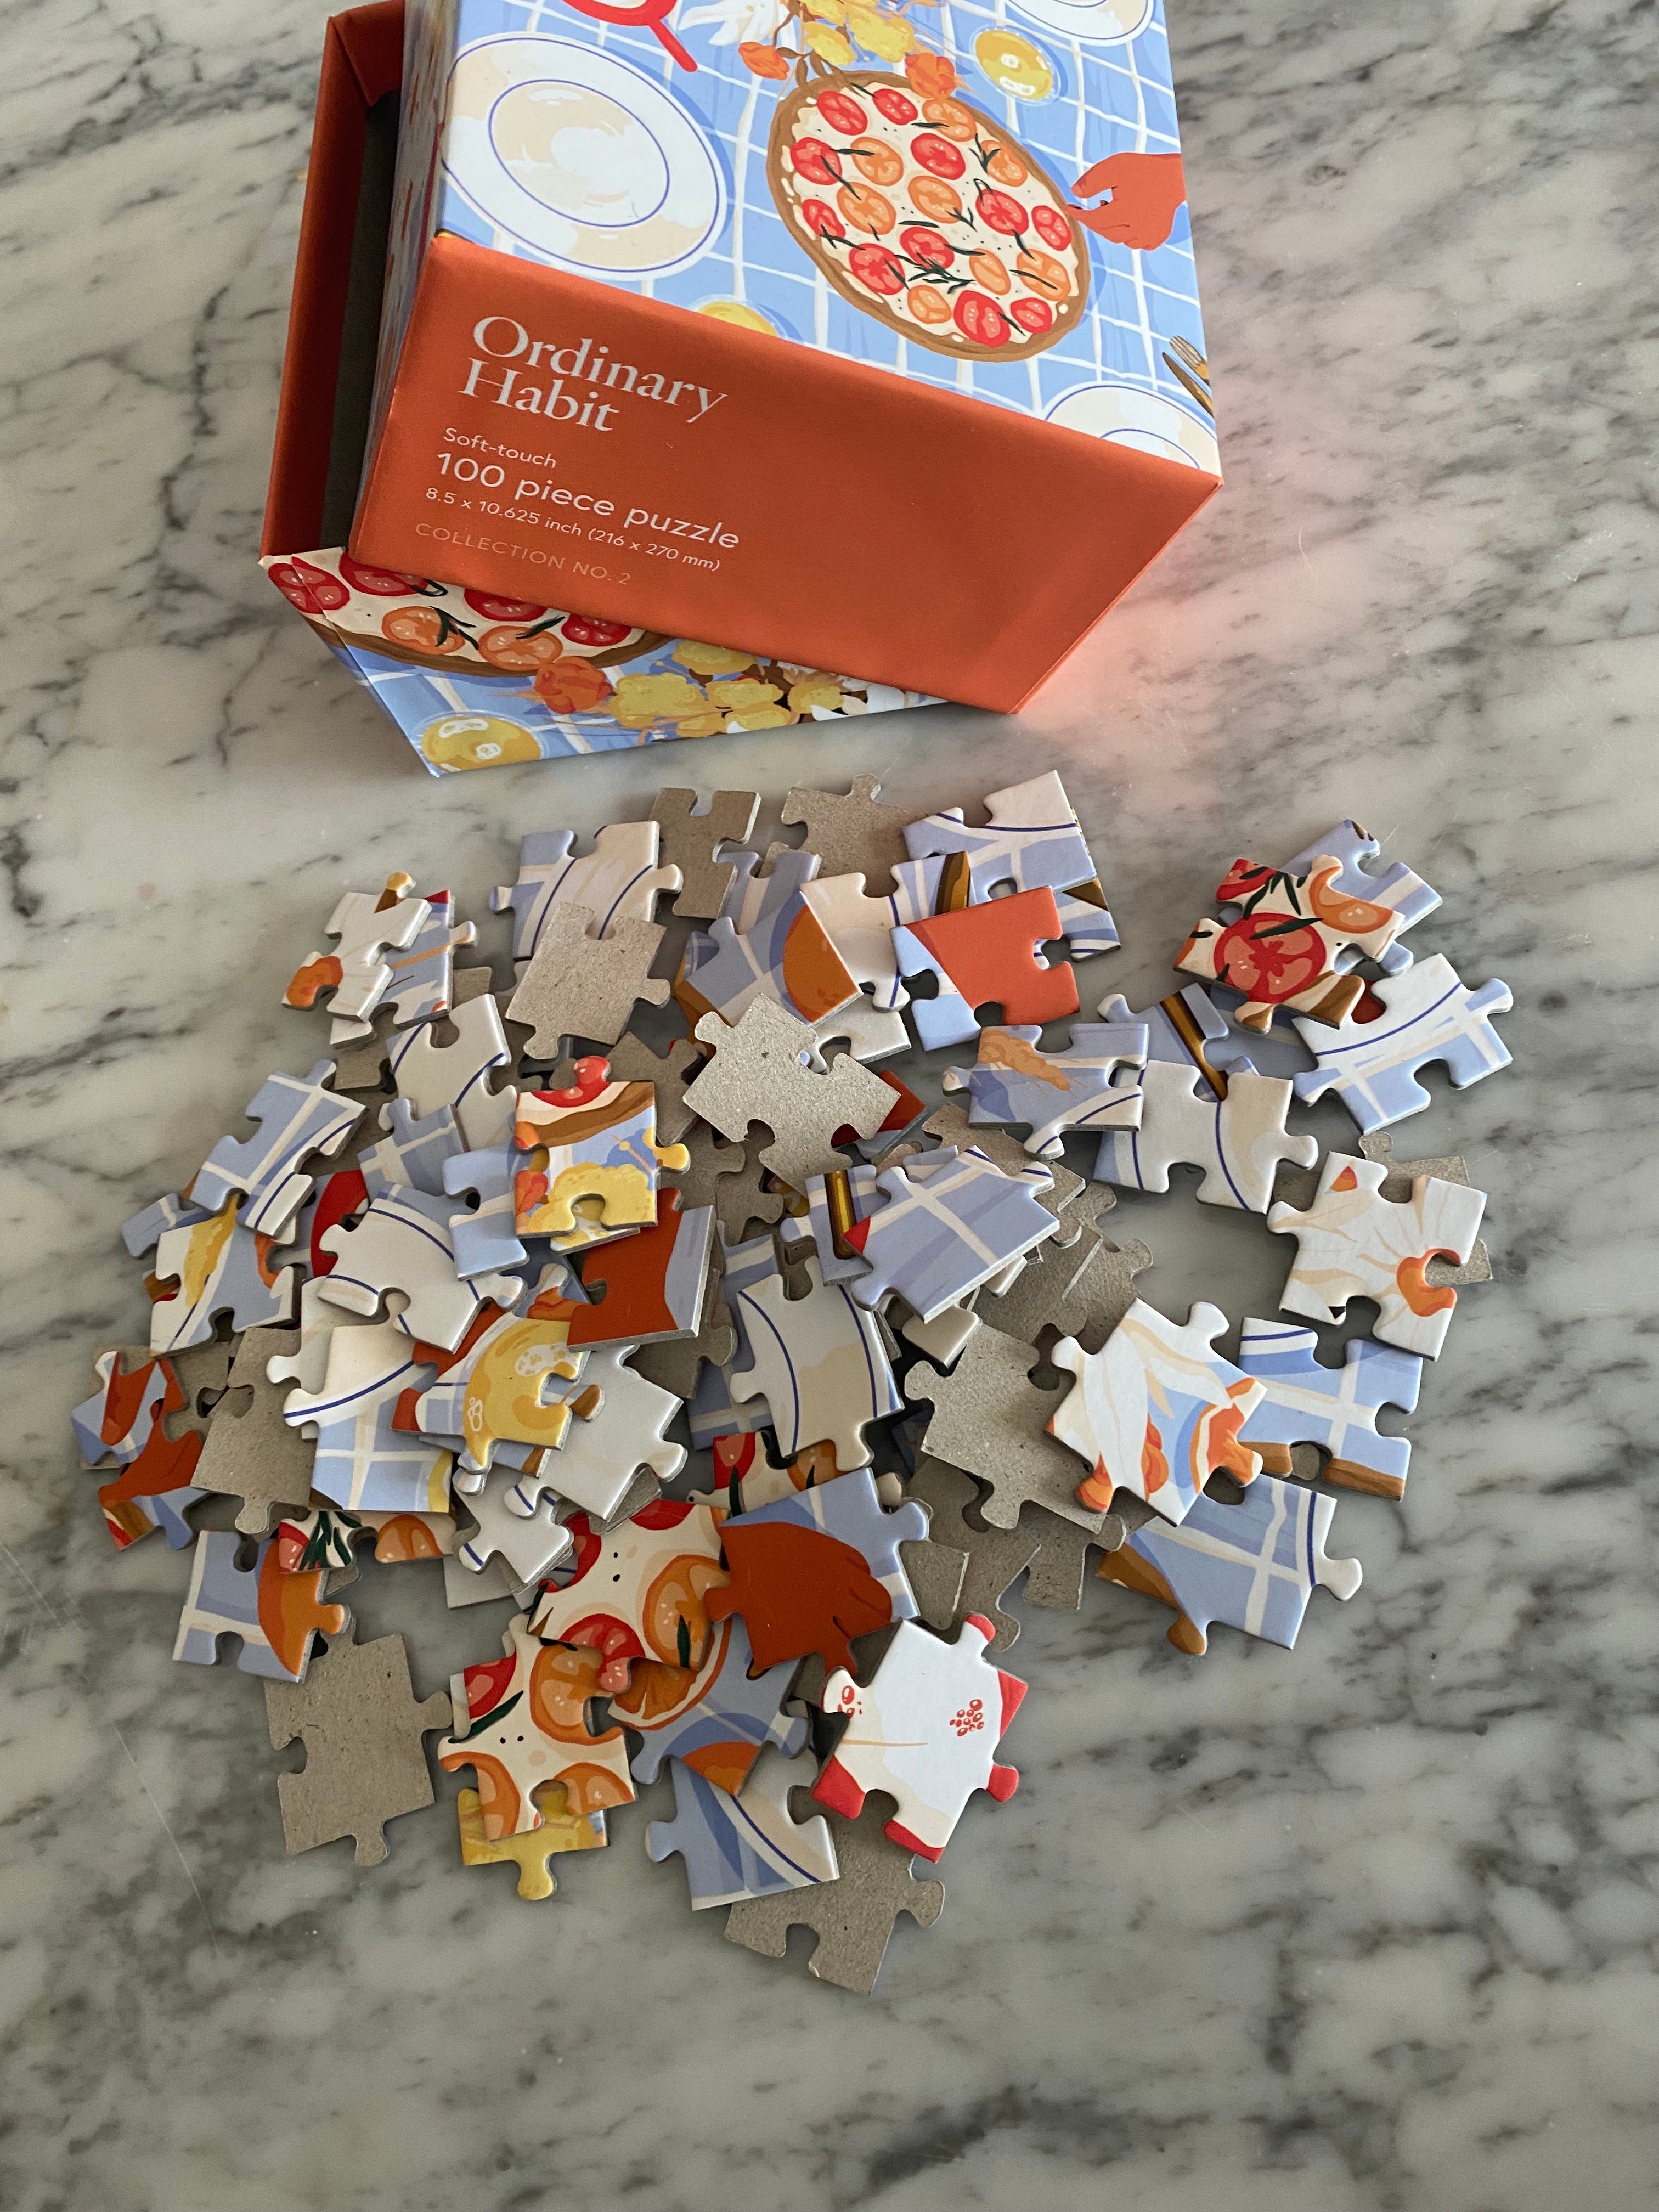 Ordinary Habit 100 Piece Puzzle - Magical New York